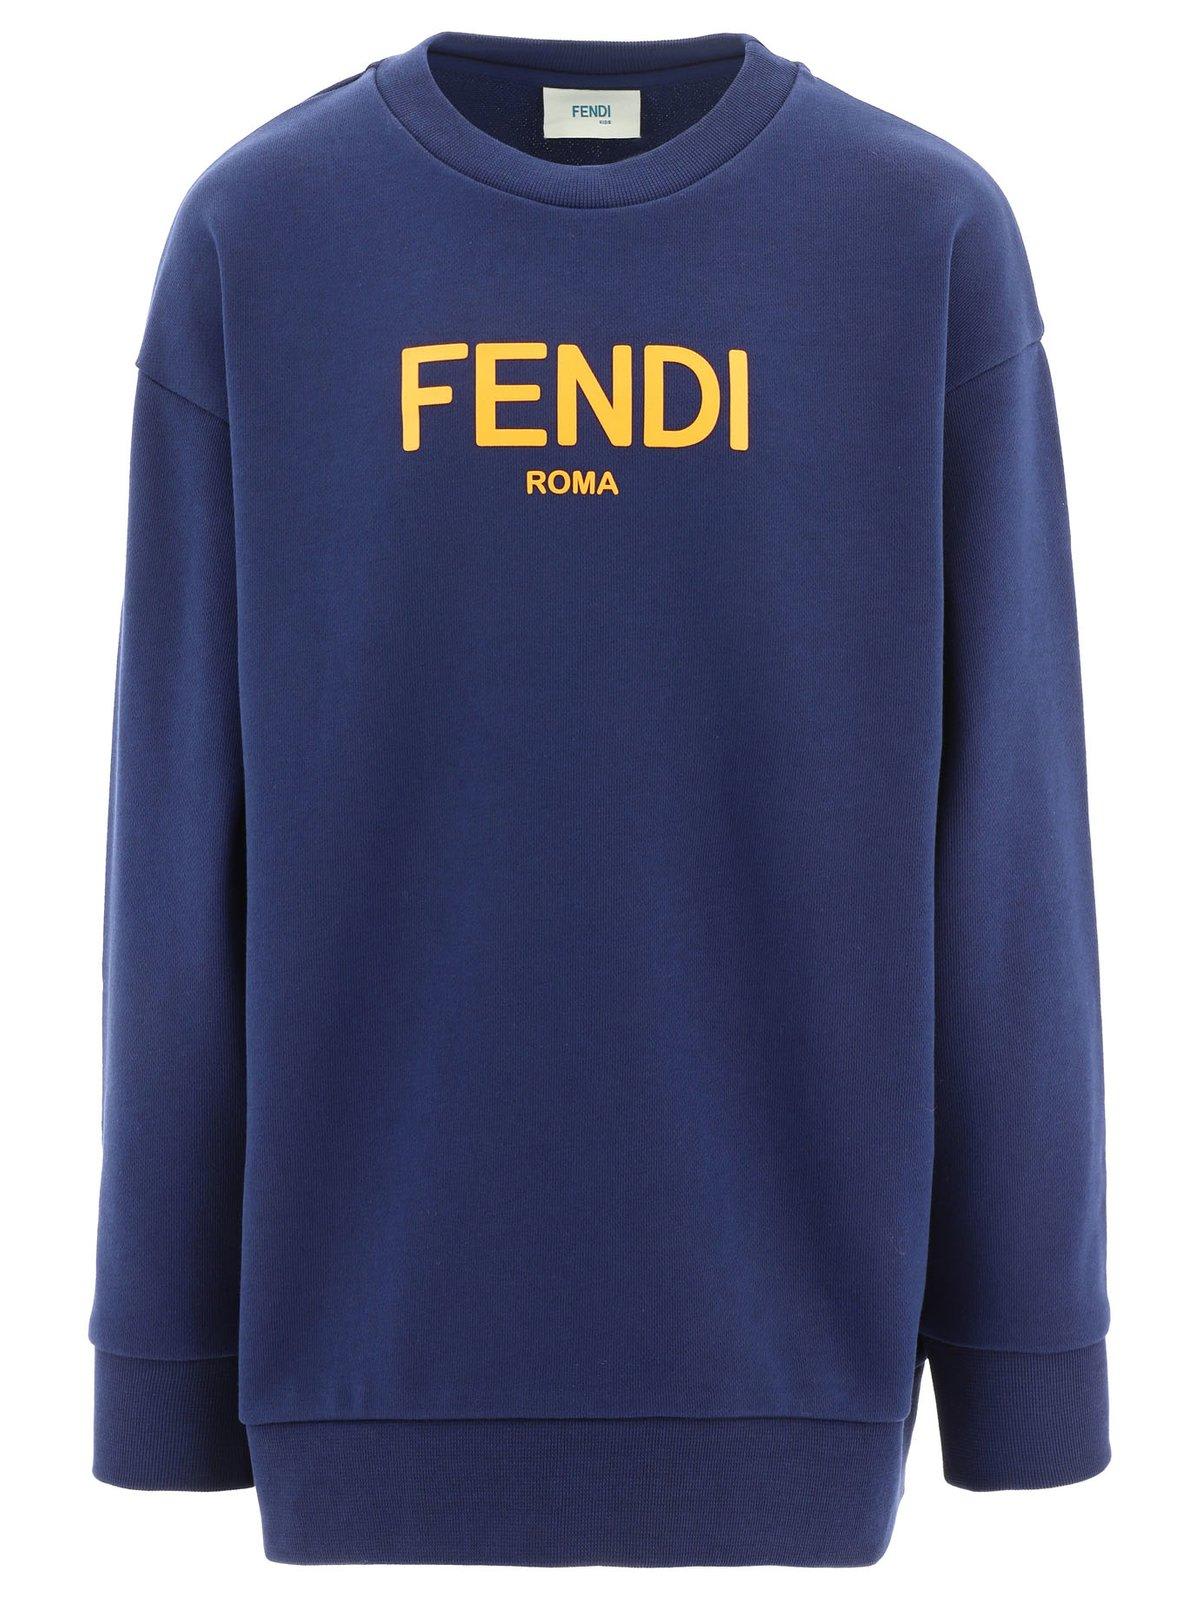 Fendi Roma Logo Printed Crewneck Sweatshirt